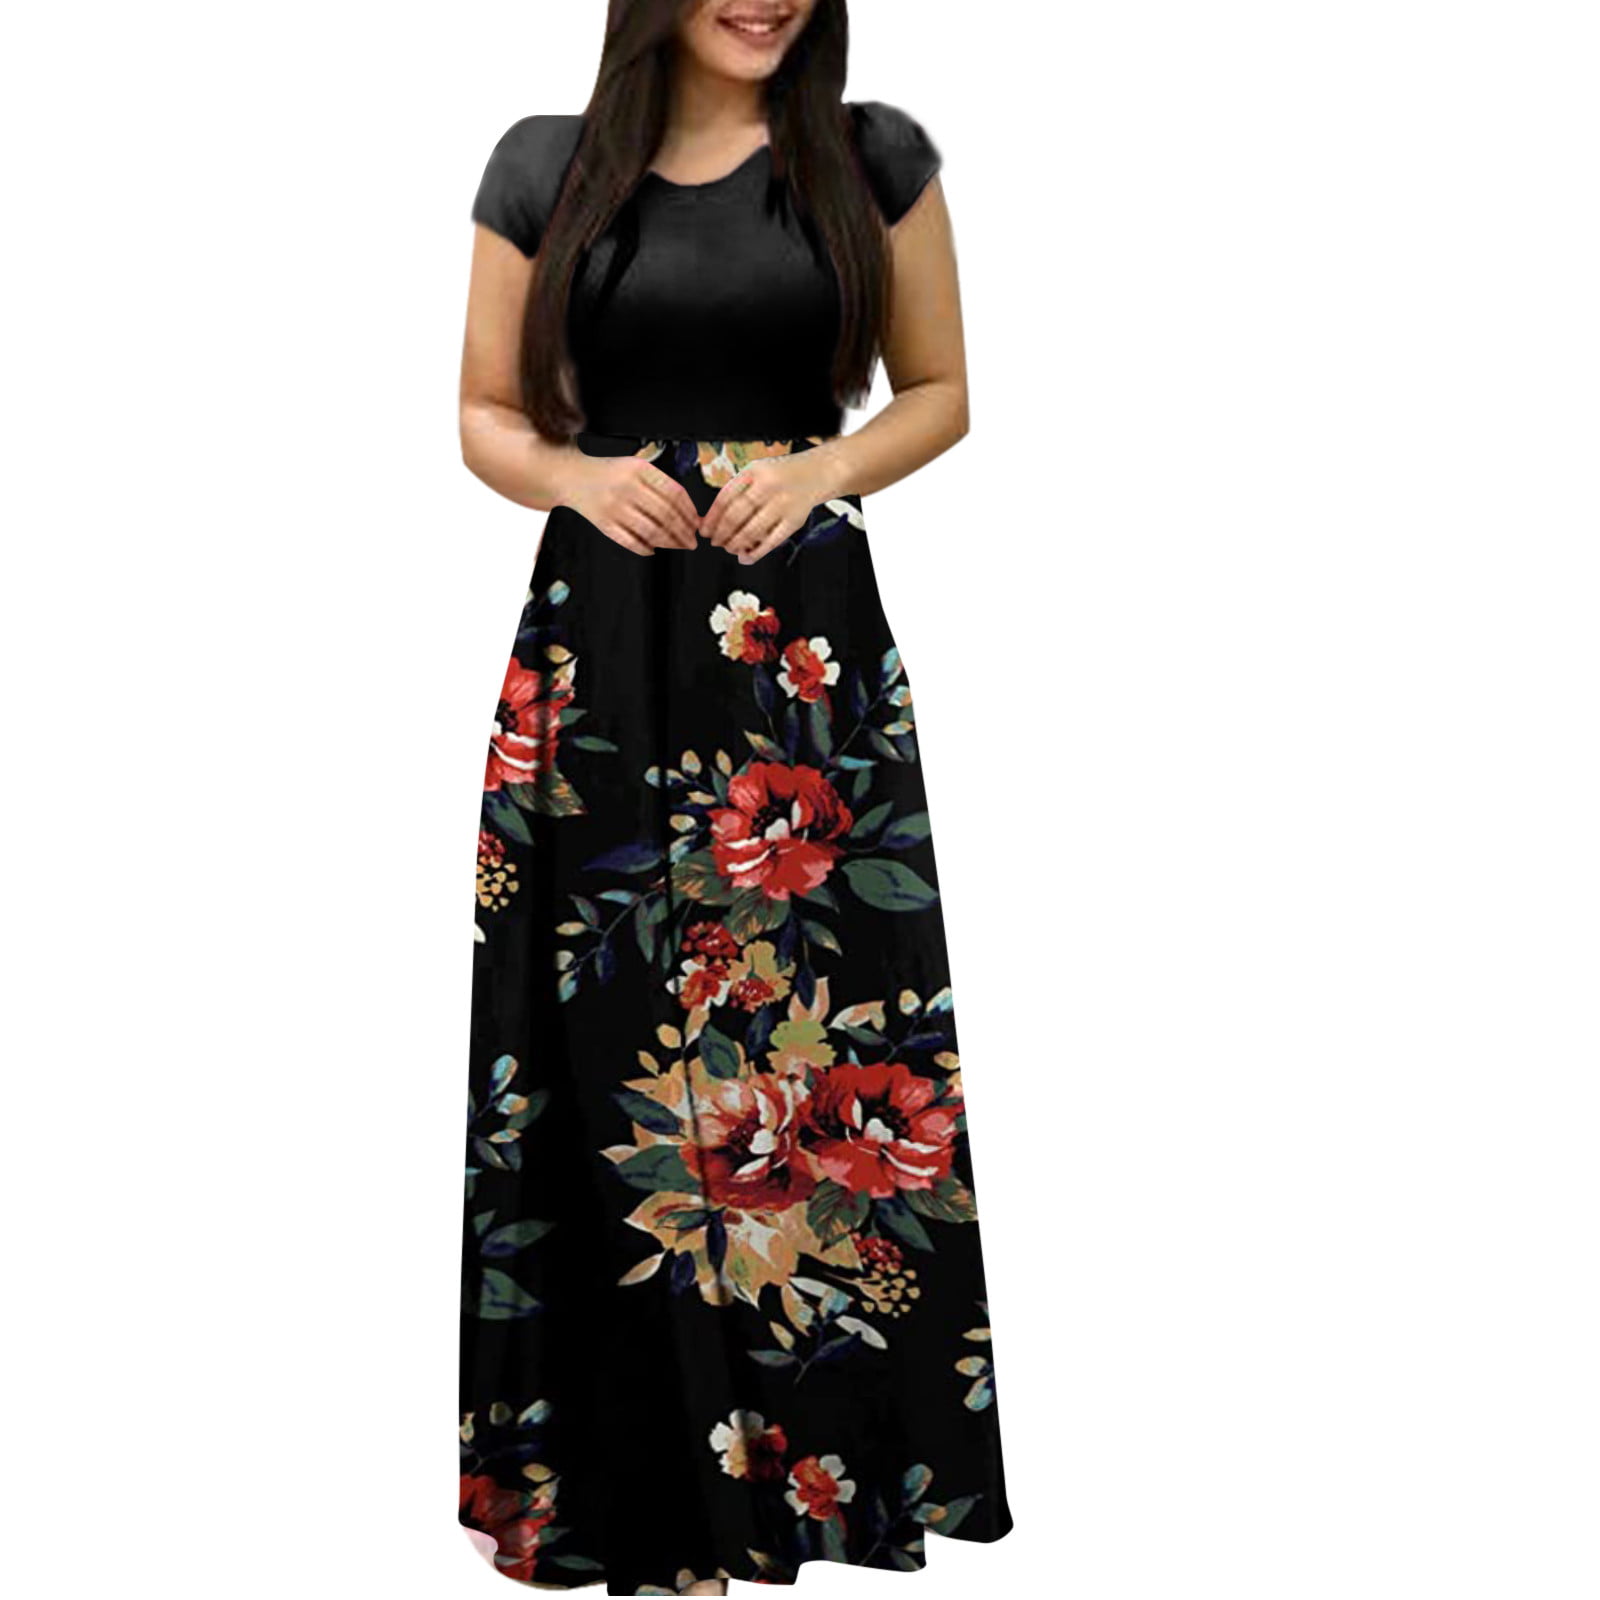 2019 Fashion!Women Summer Casual Loose Maxi Dress Leafs Printed Short Sleeve Plus Size Retro Sundress 